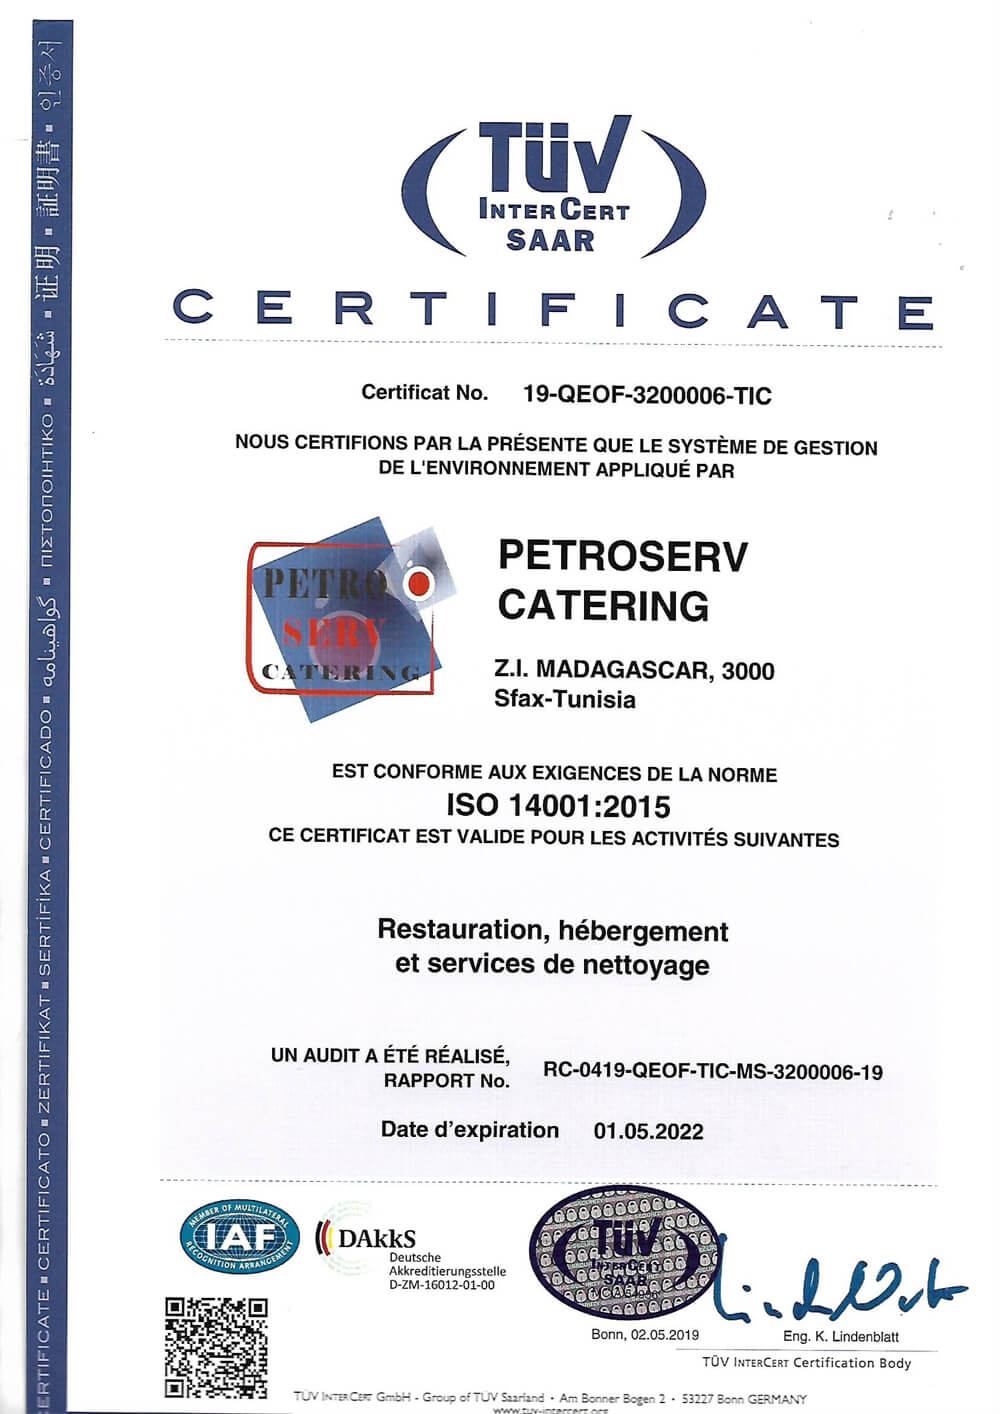 Petroserv-catering-iso14001